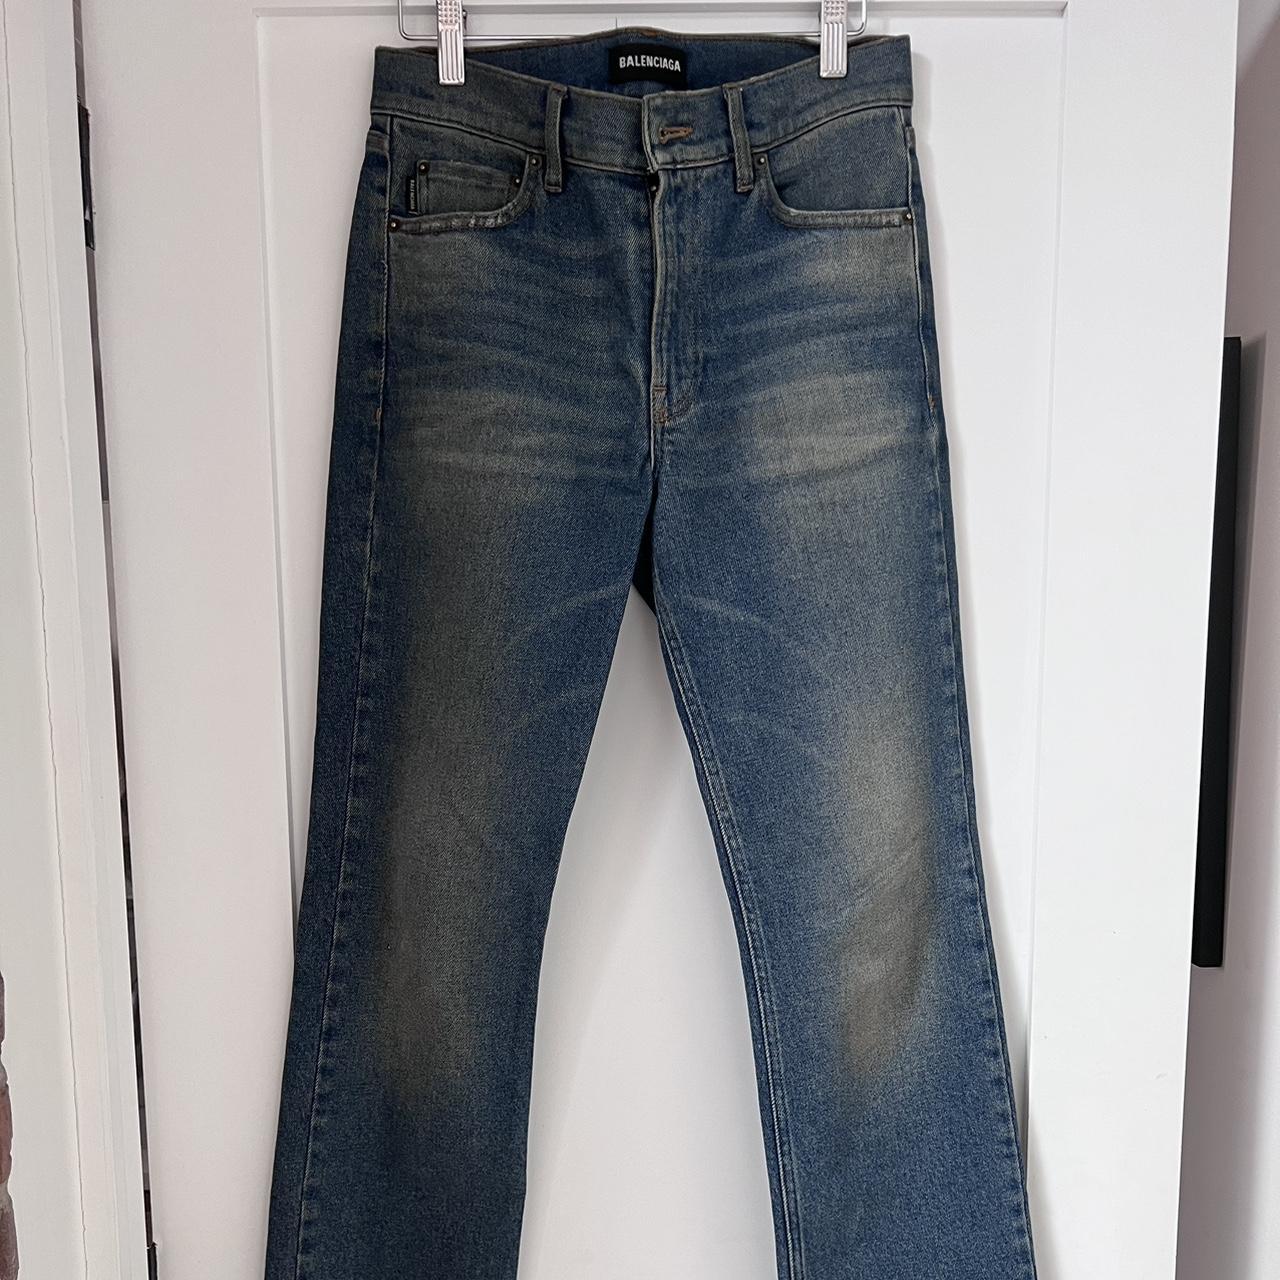 Balenciaga Men's Jeans | Depop